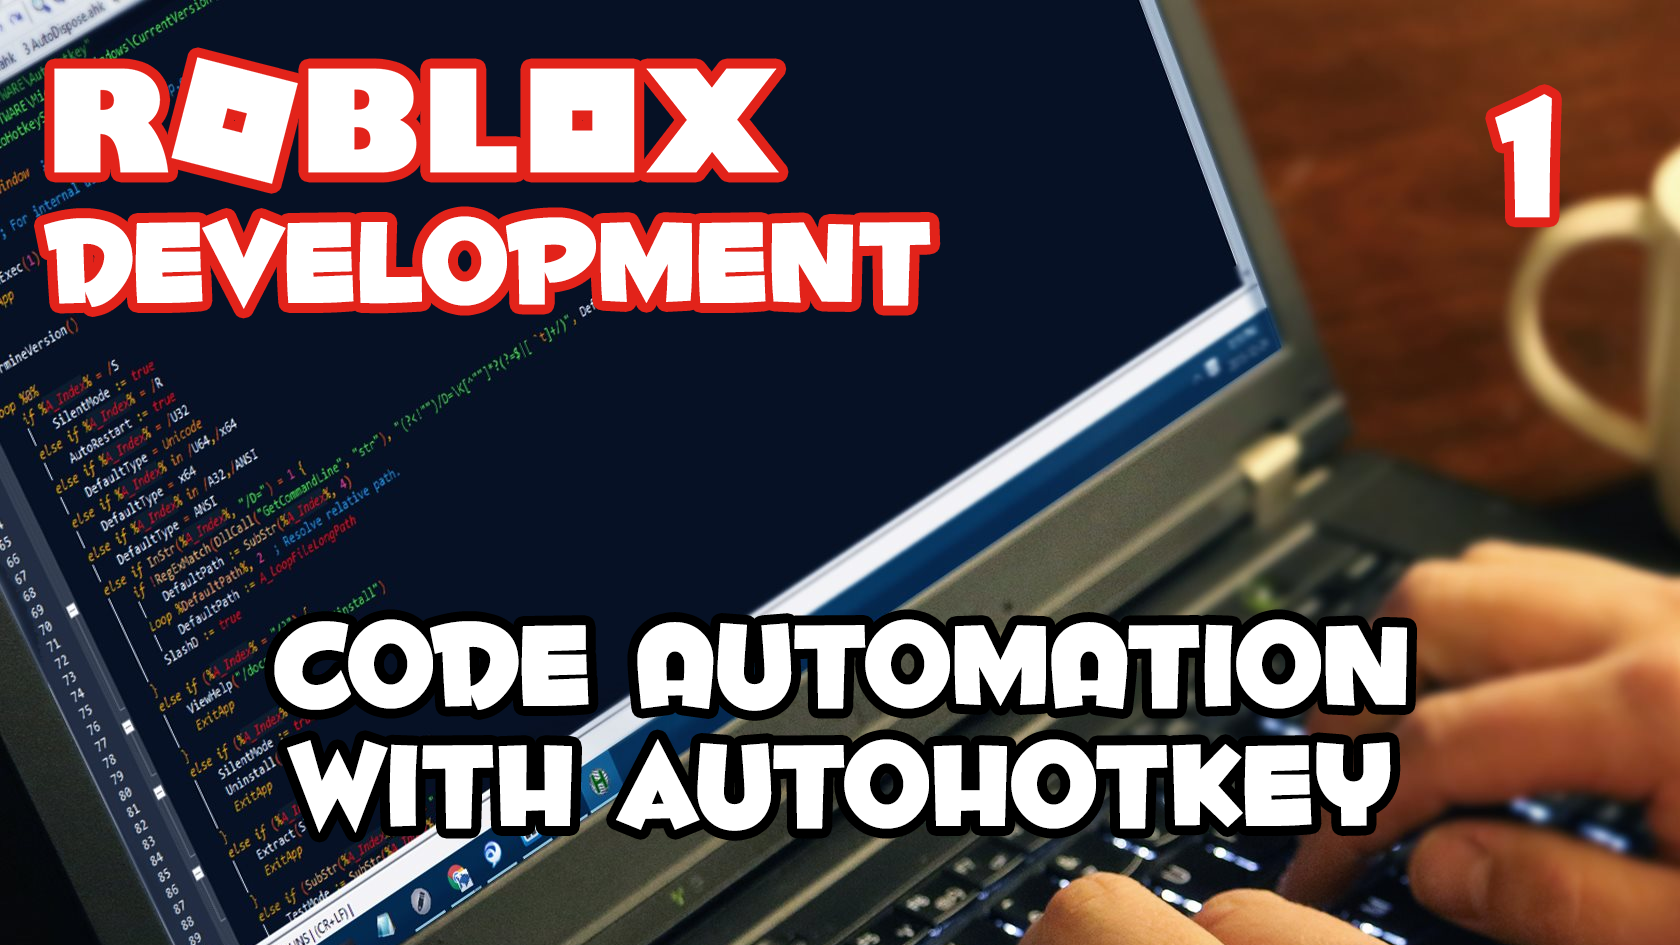 Roblox Code Automation With Lua Code Templates In Roblox Studio With Autohotkey Roblox Development 01 Cria Jogo - lf game roblox